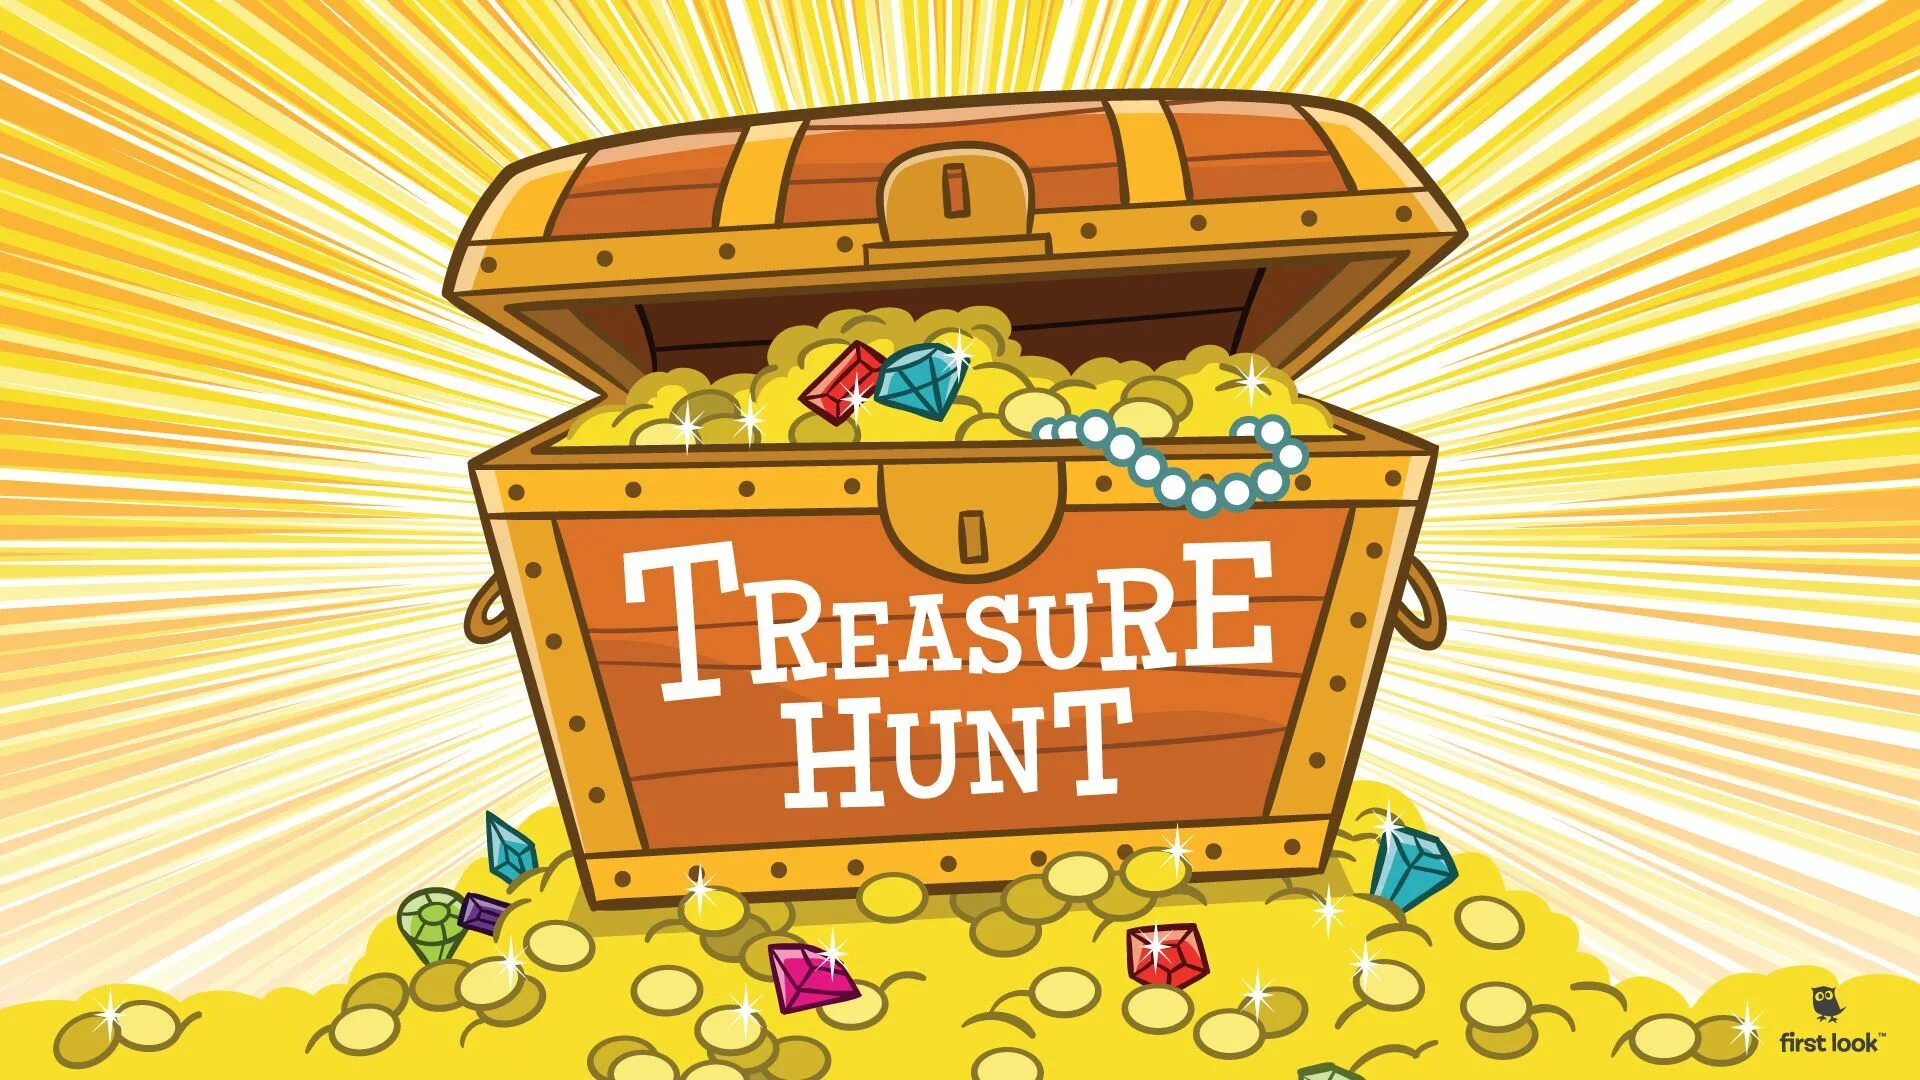 The Treasure Hunt. Treasure Hunt game. Kids Treasure Hunt. Outdoor Treasure Hunt. Take treasure